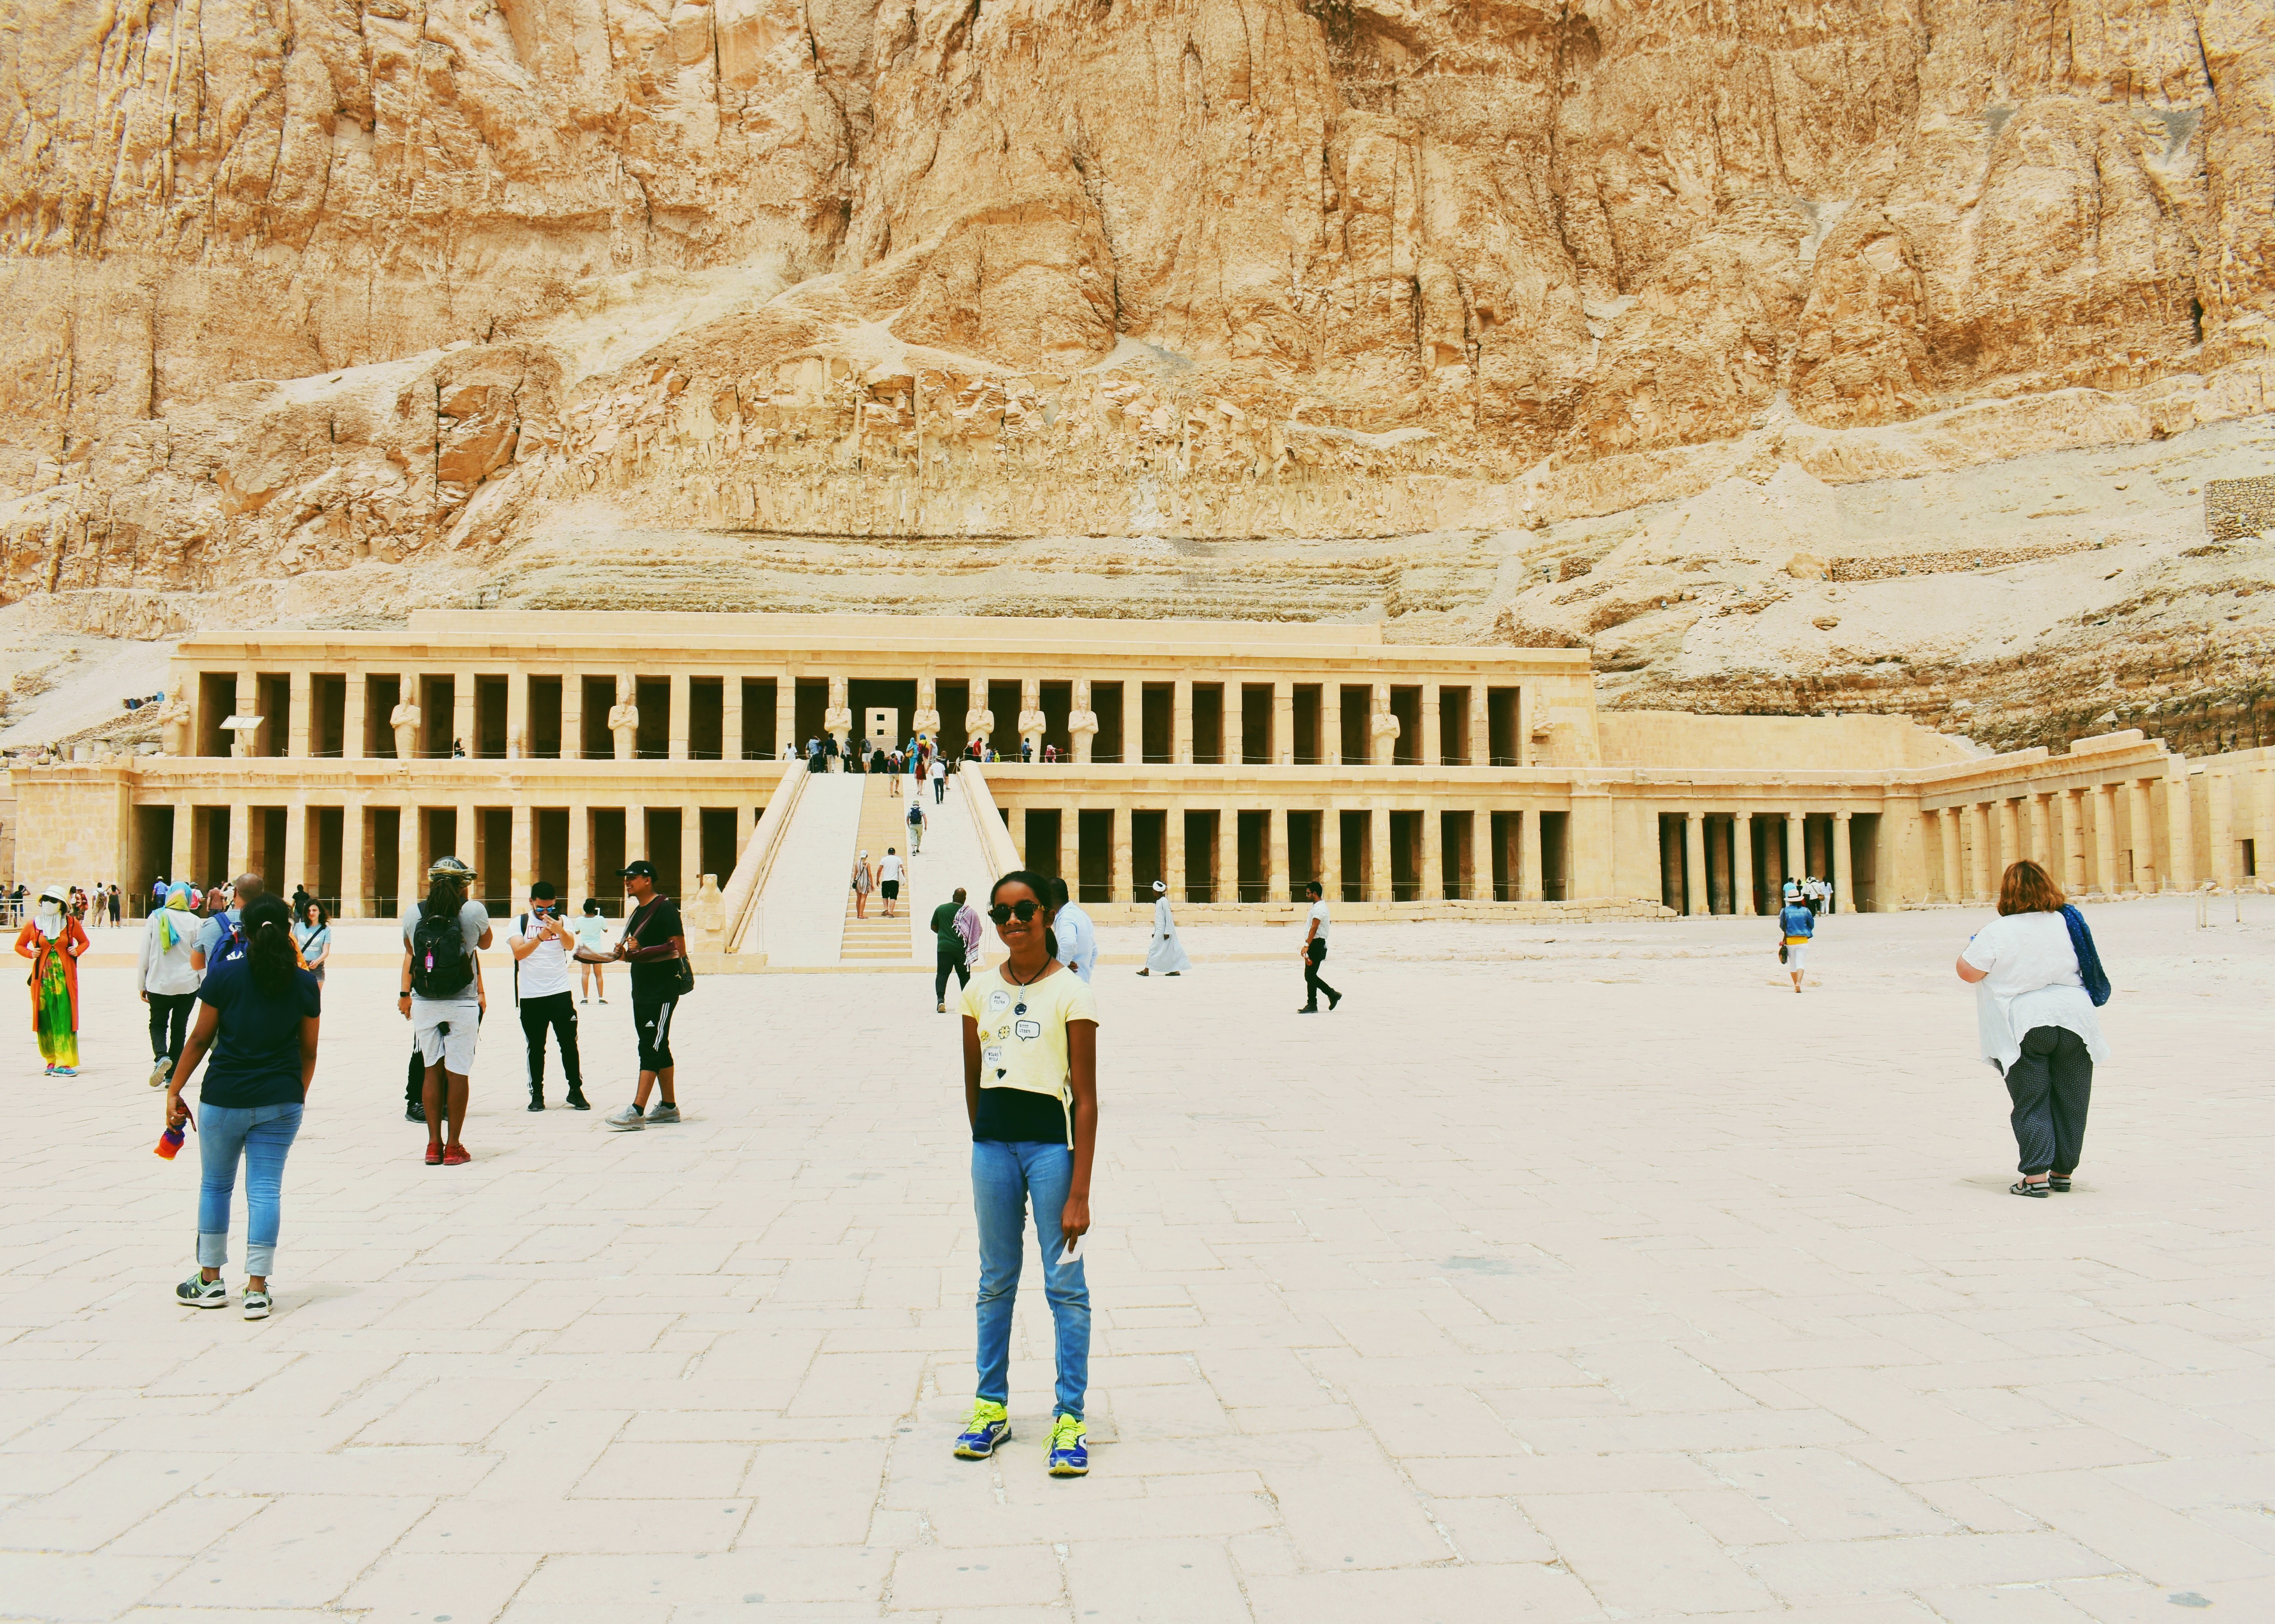 Another shot of Hatshepsut's temple